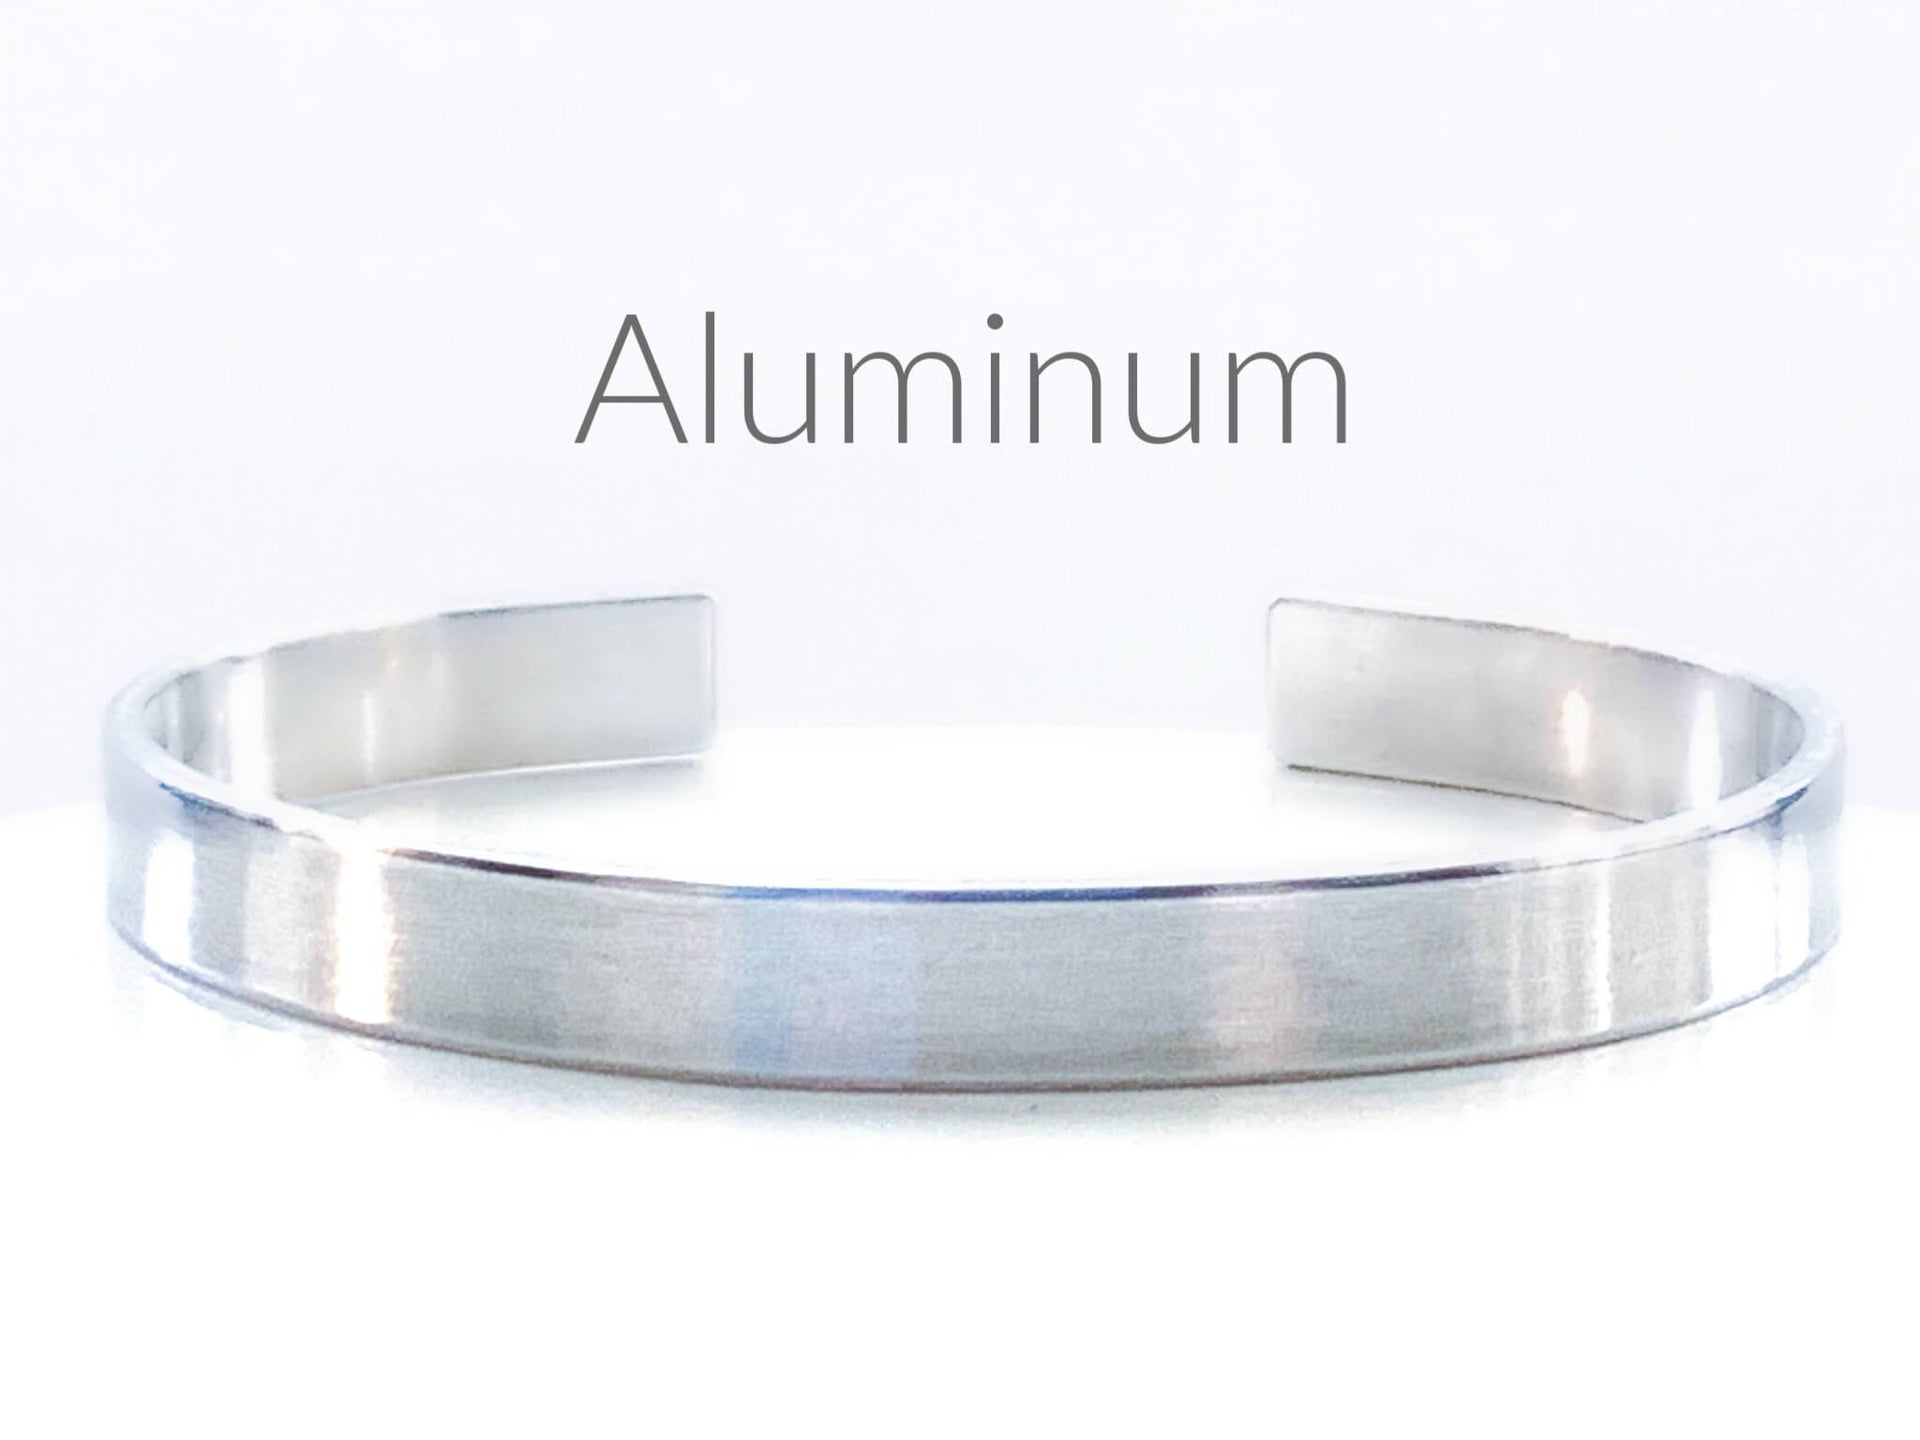 Everything Beautiful Bracelets Aluminum Beloved Hebrew Bracelet - Brass, Copper or Aluminum